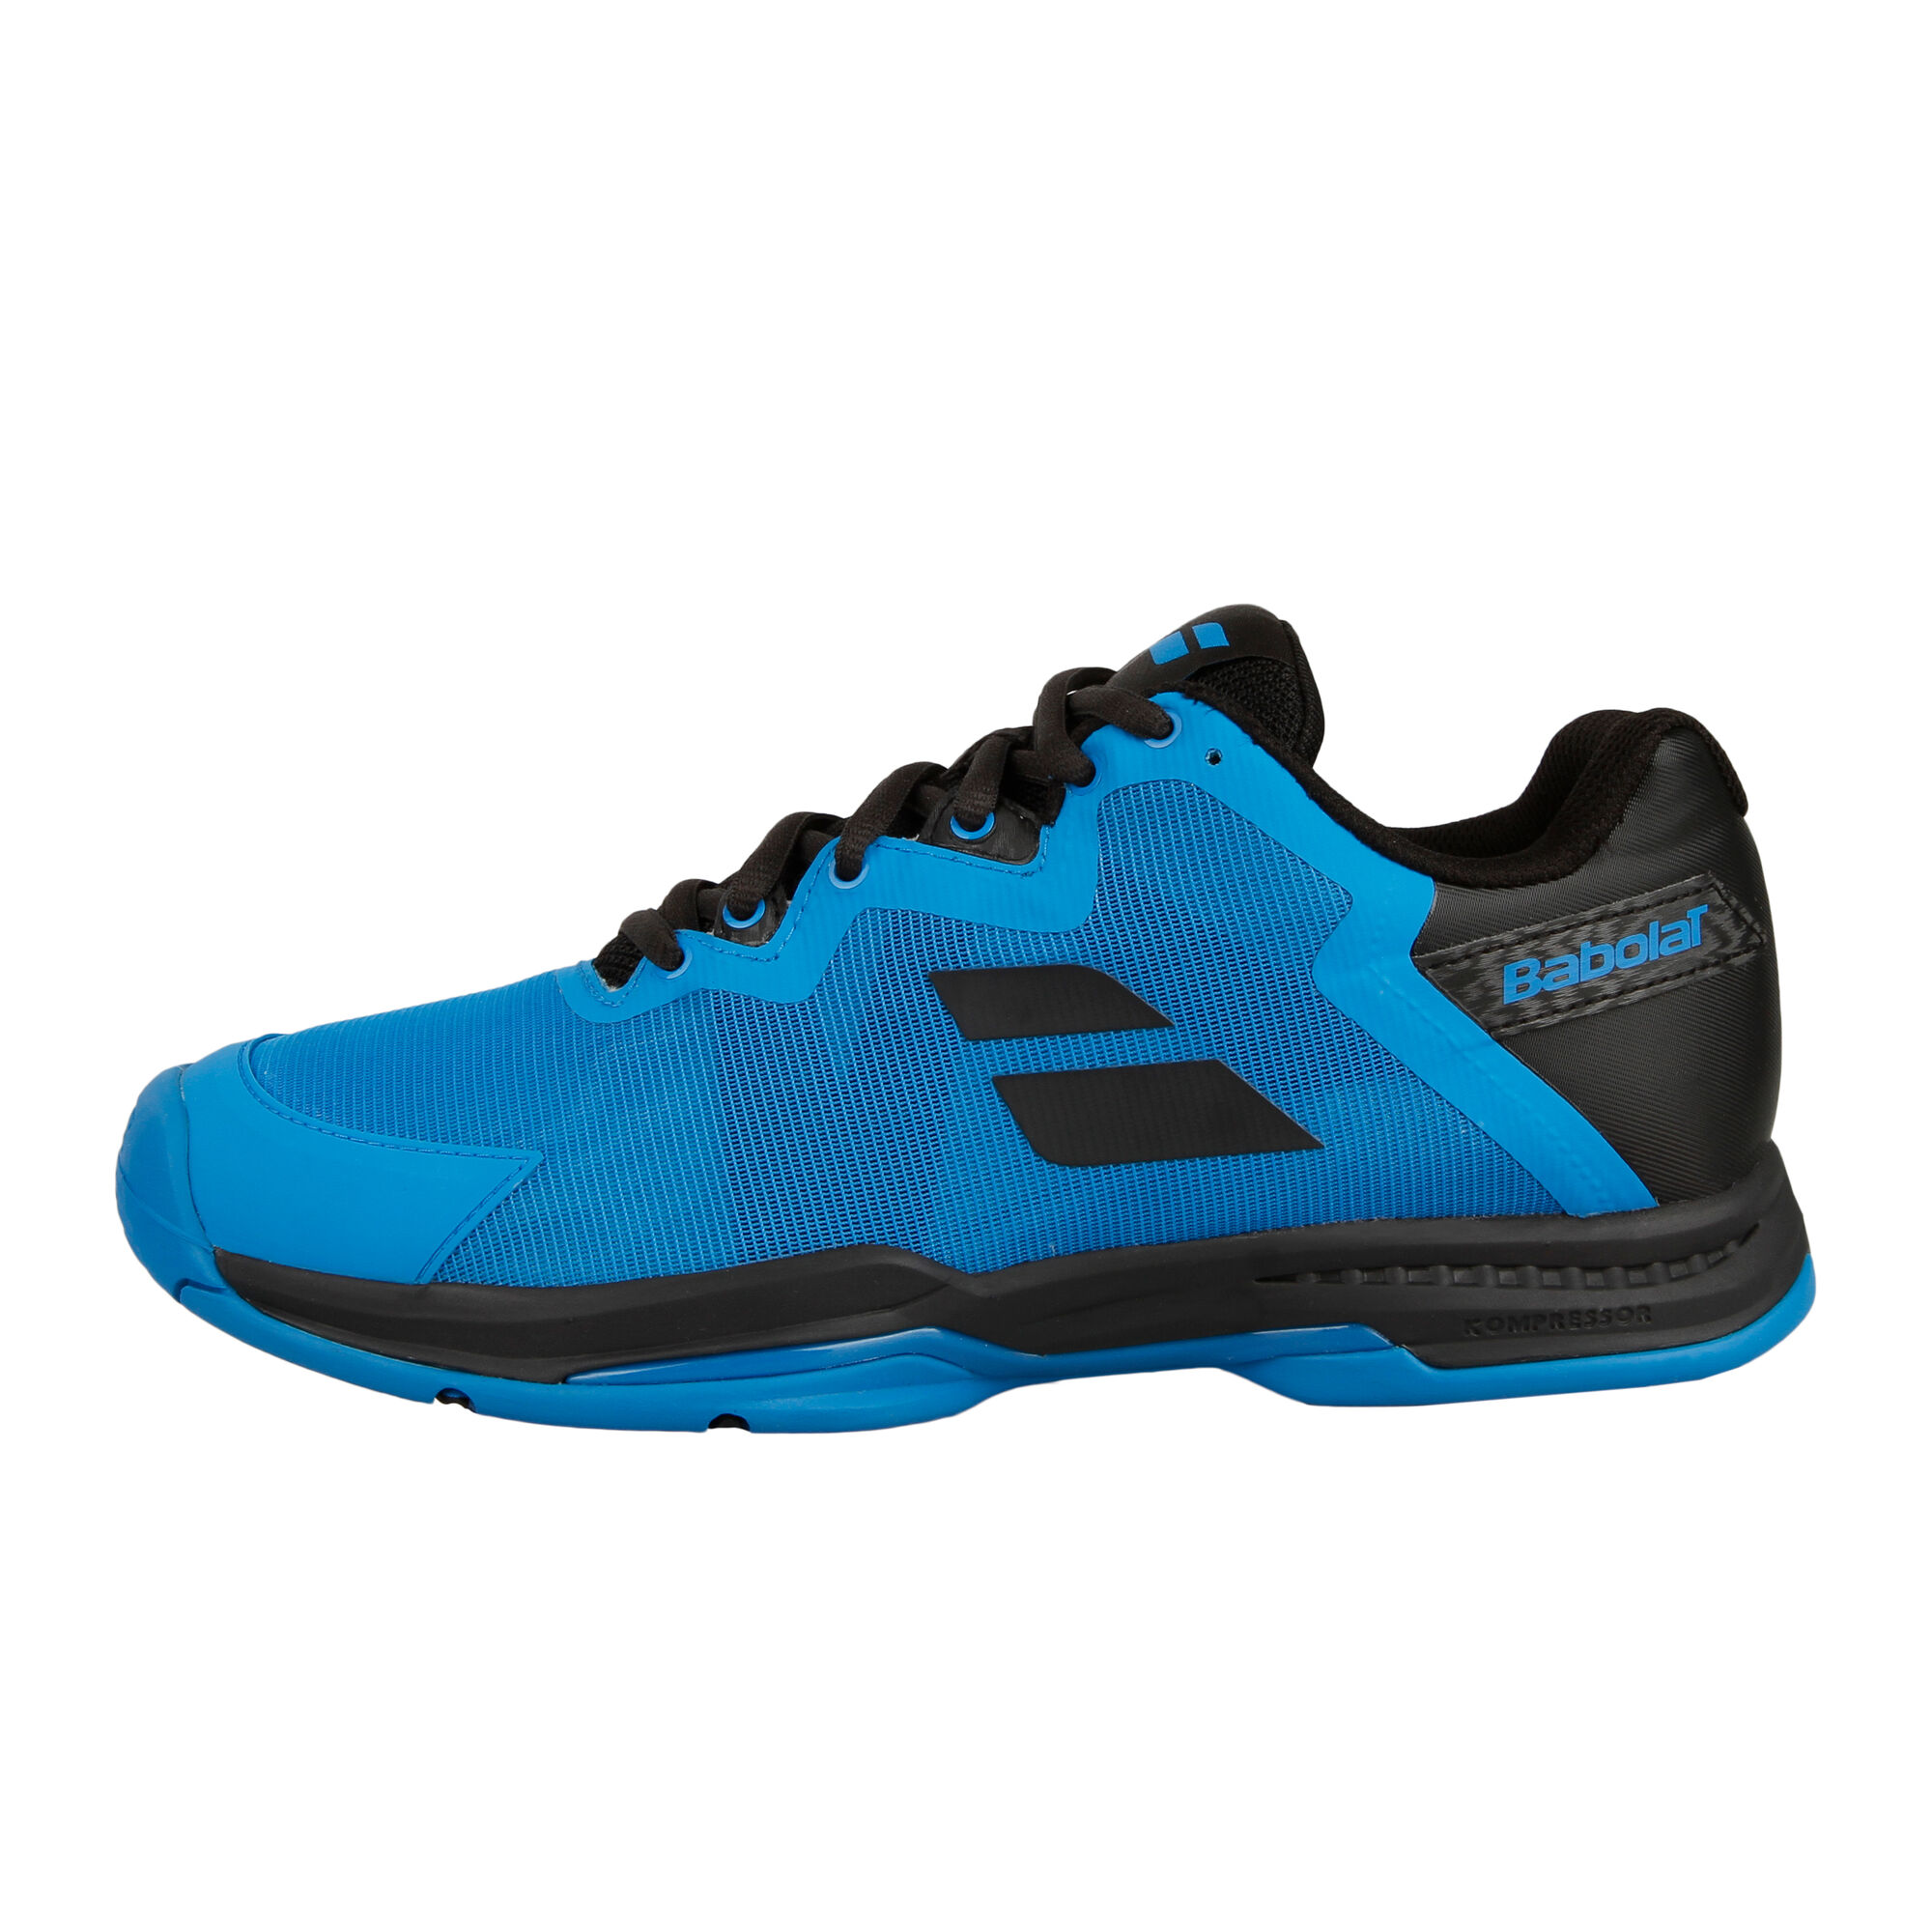 Buy Babolat Sfx 3 All Court Shoe Men Blue, Black online | Tennis Point UK